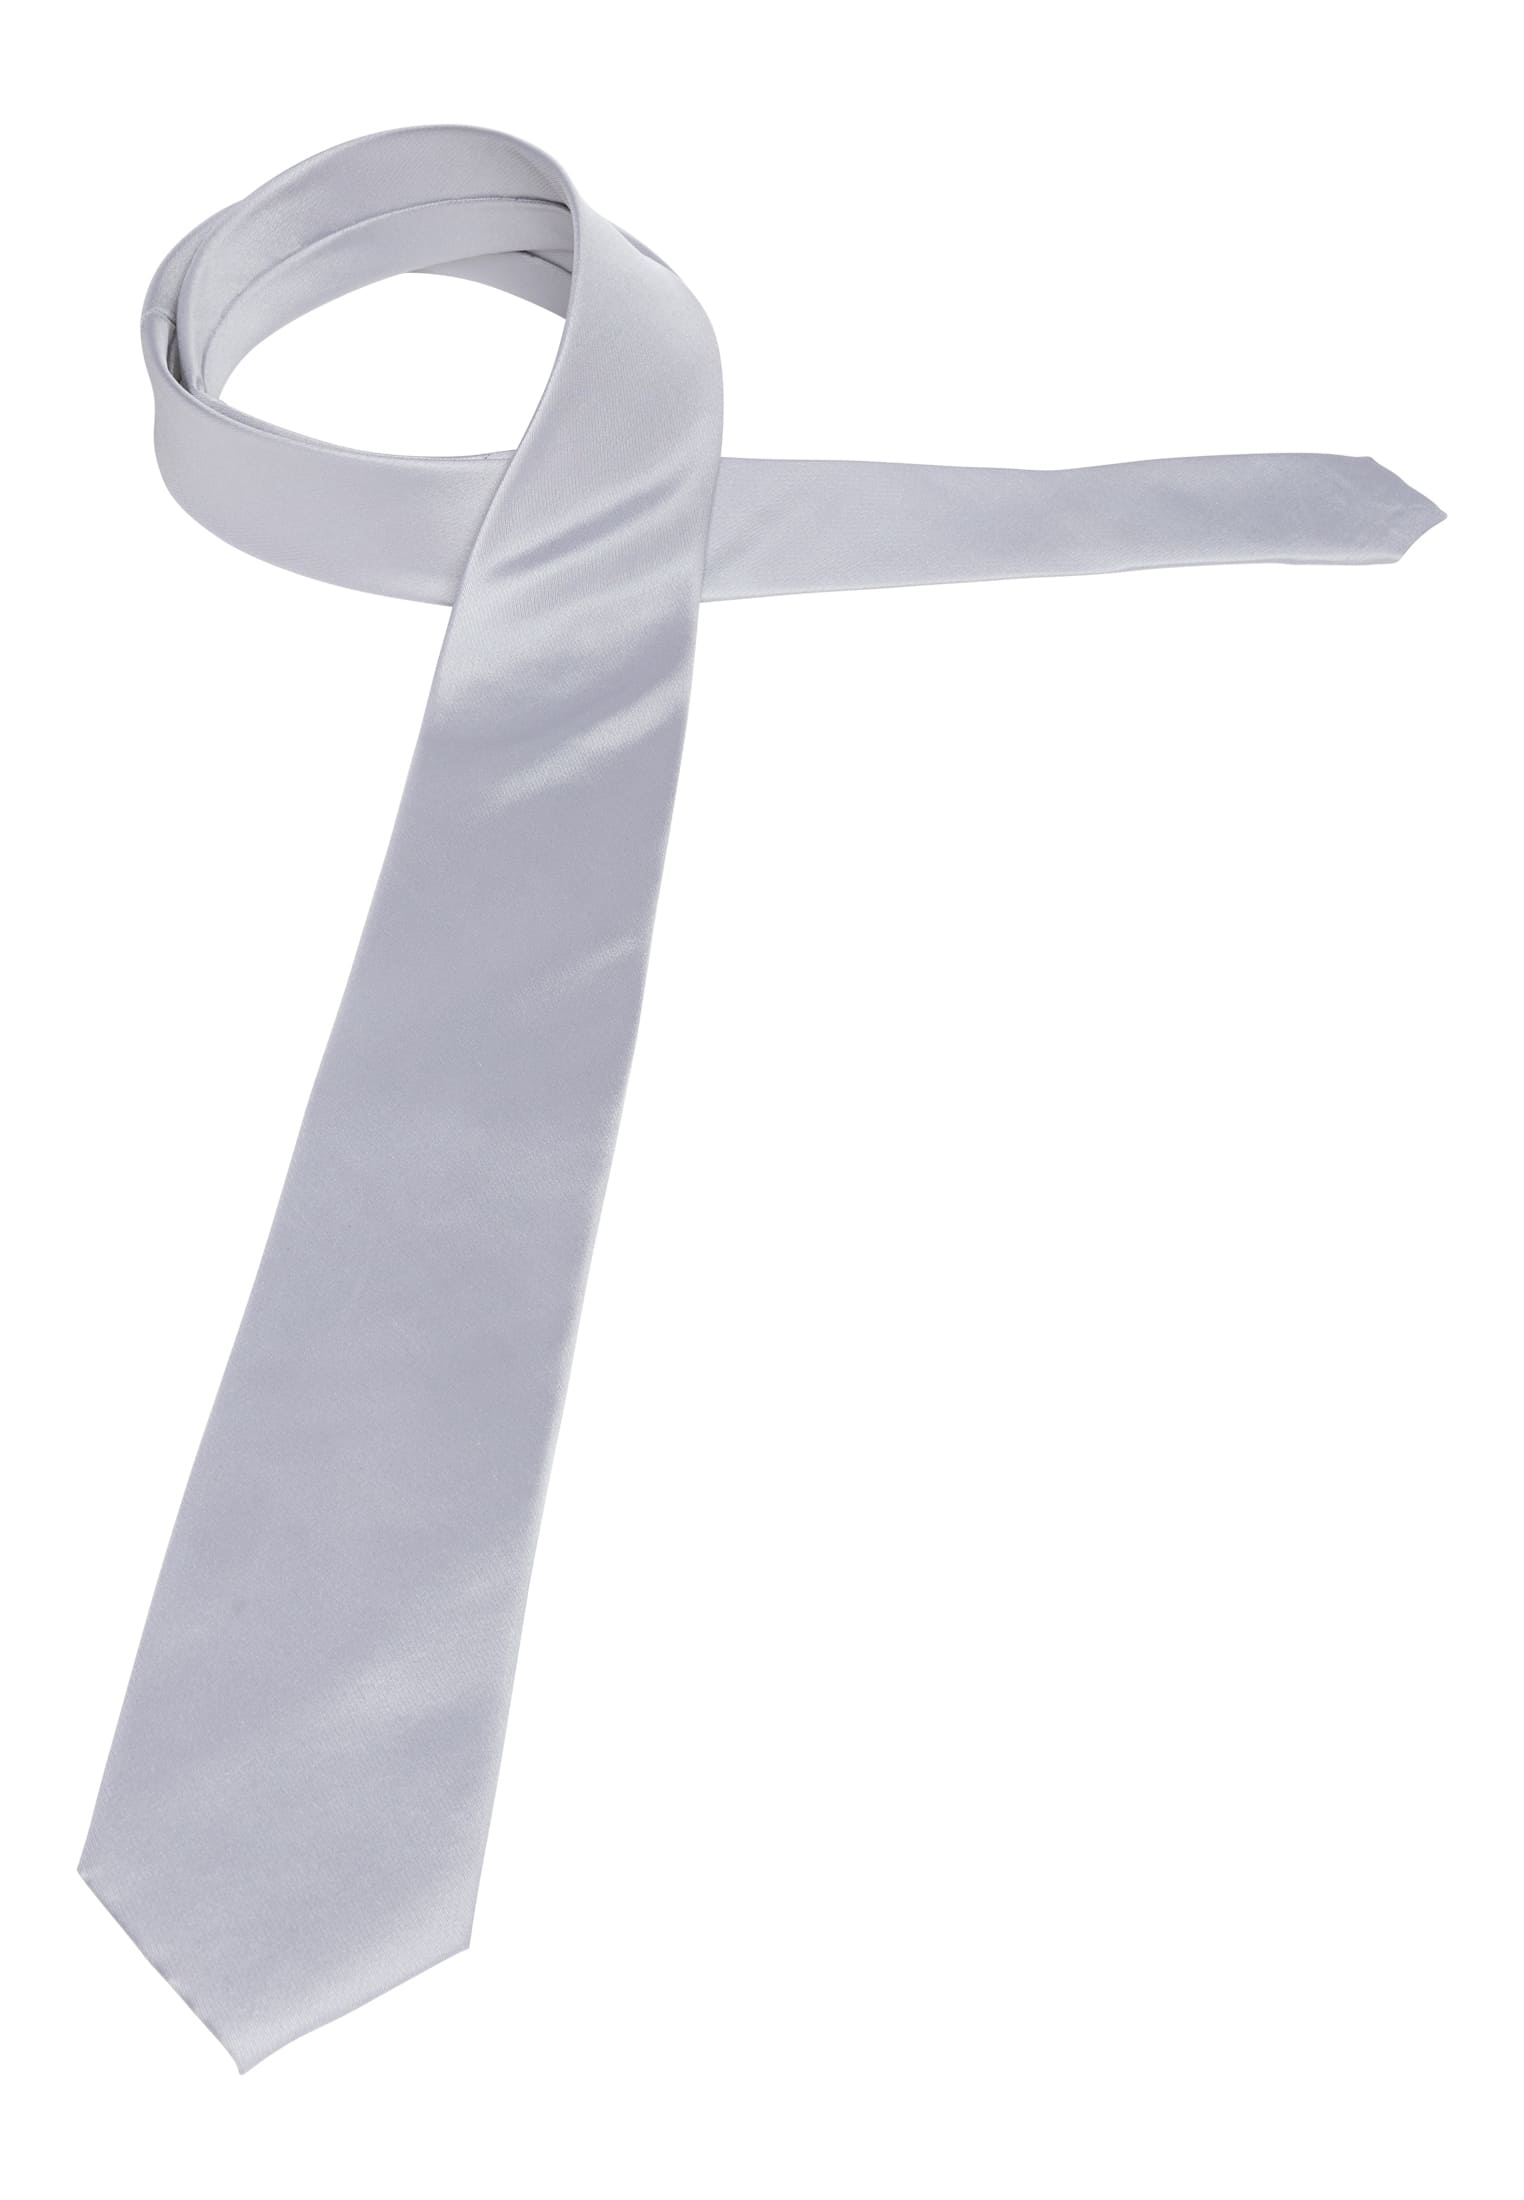 Krawatte in | silber 1AC02086-03-11-142 silber | 142 | unifarben